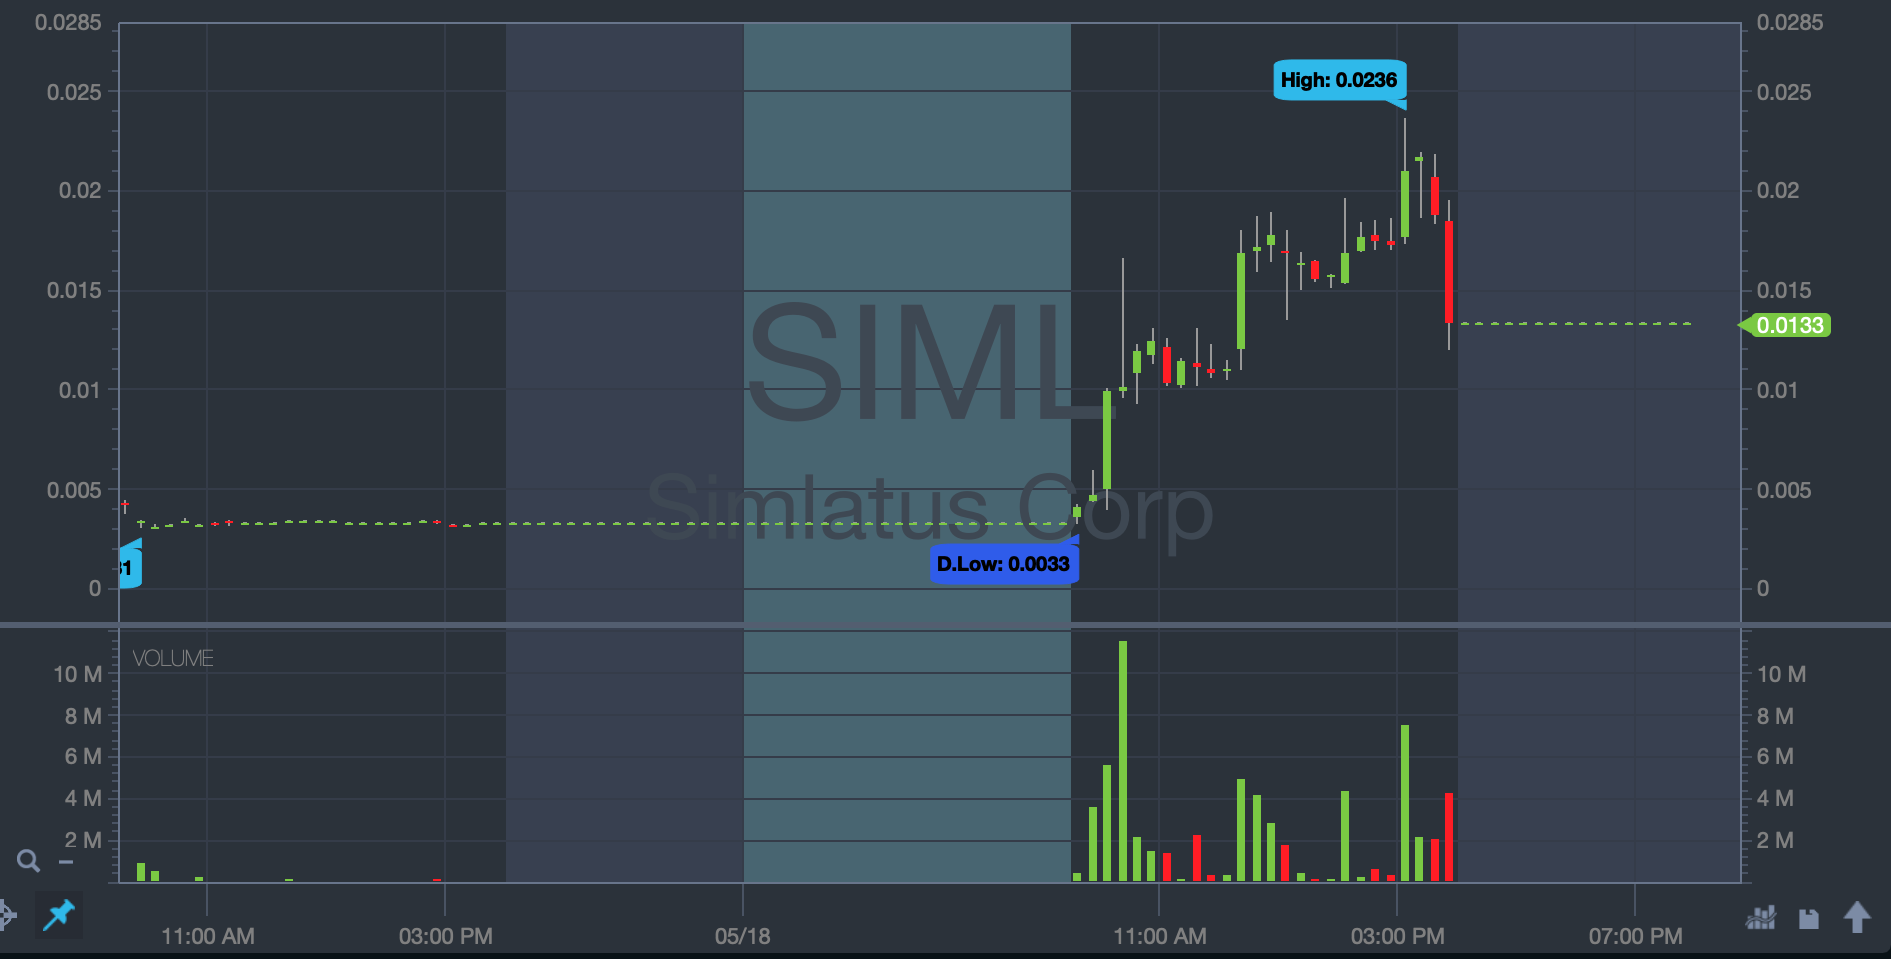 SIML stock chart